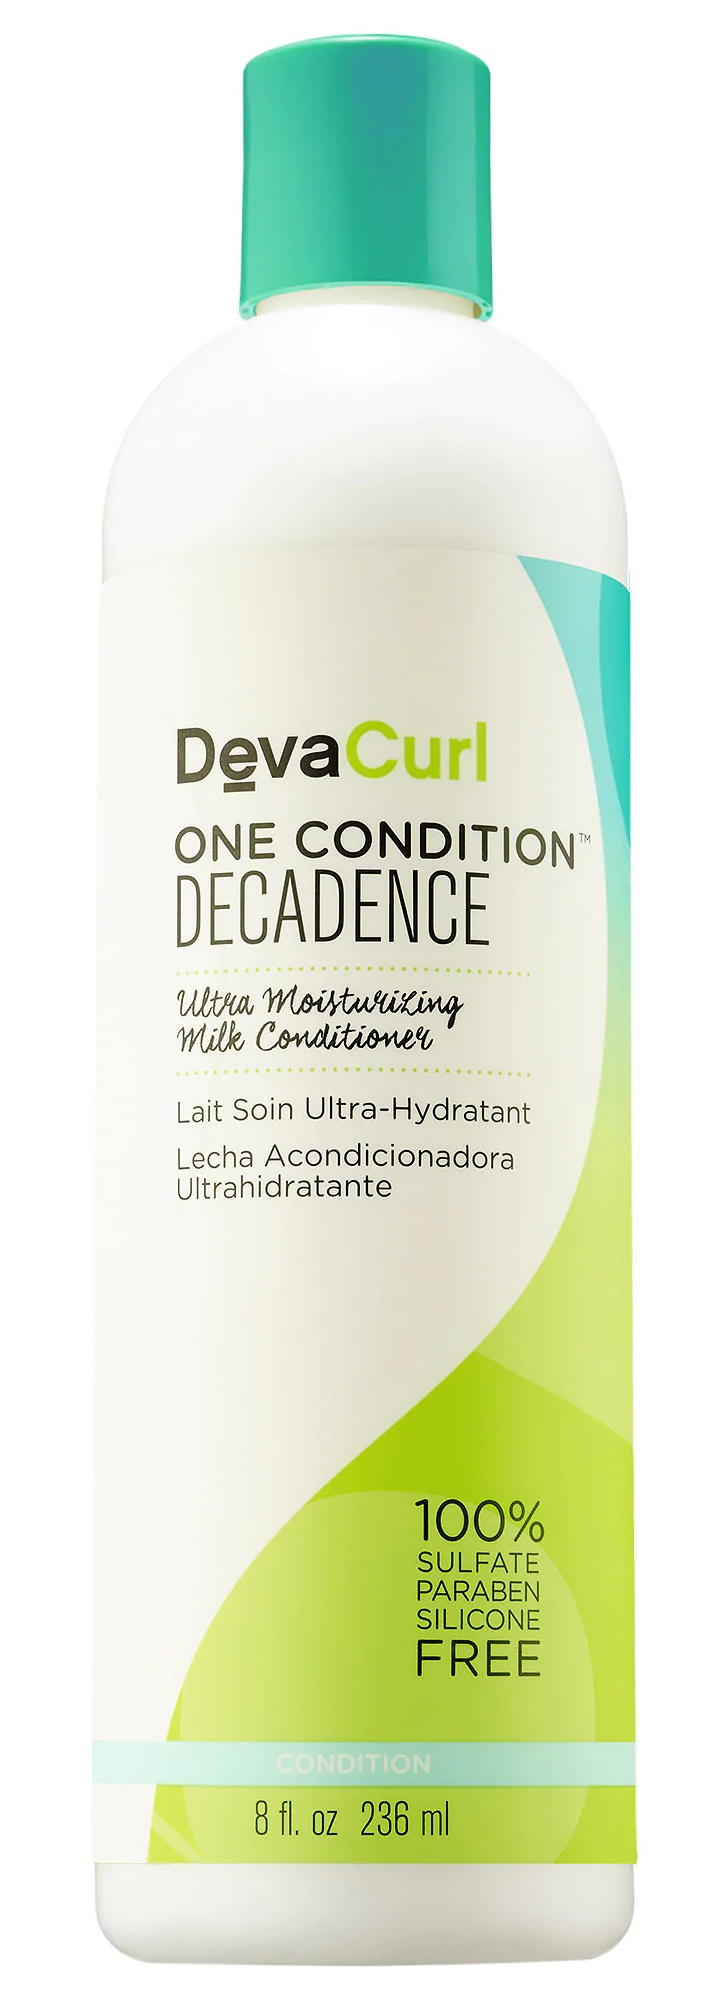 DevaCurl One Condition™ Decadence